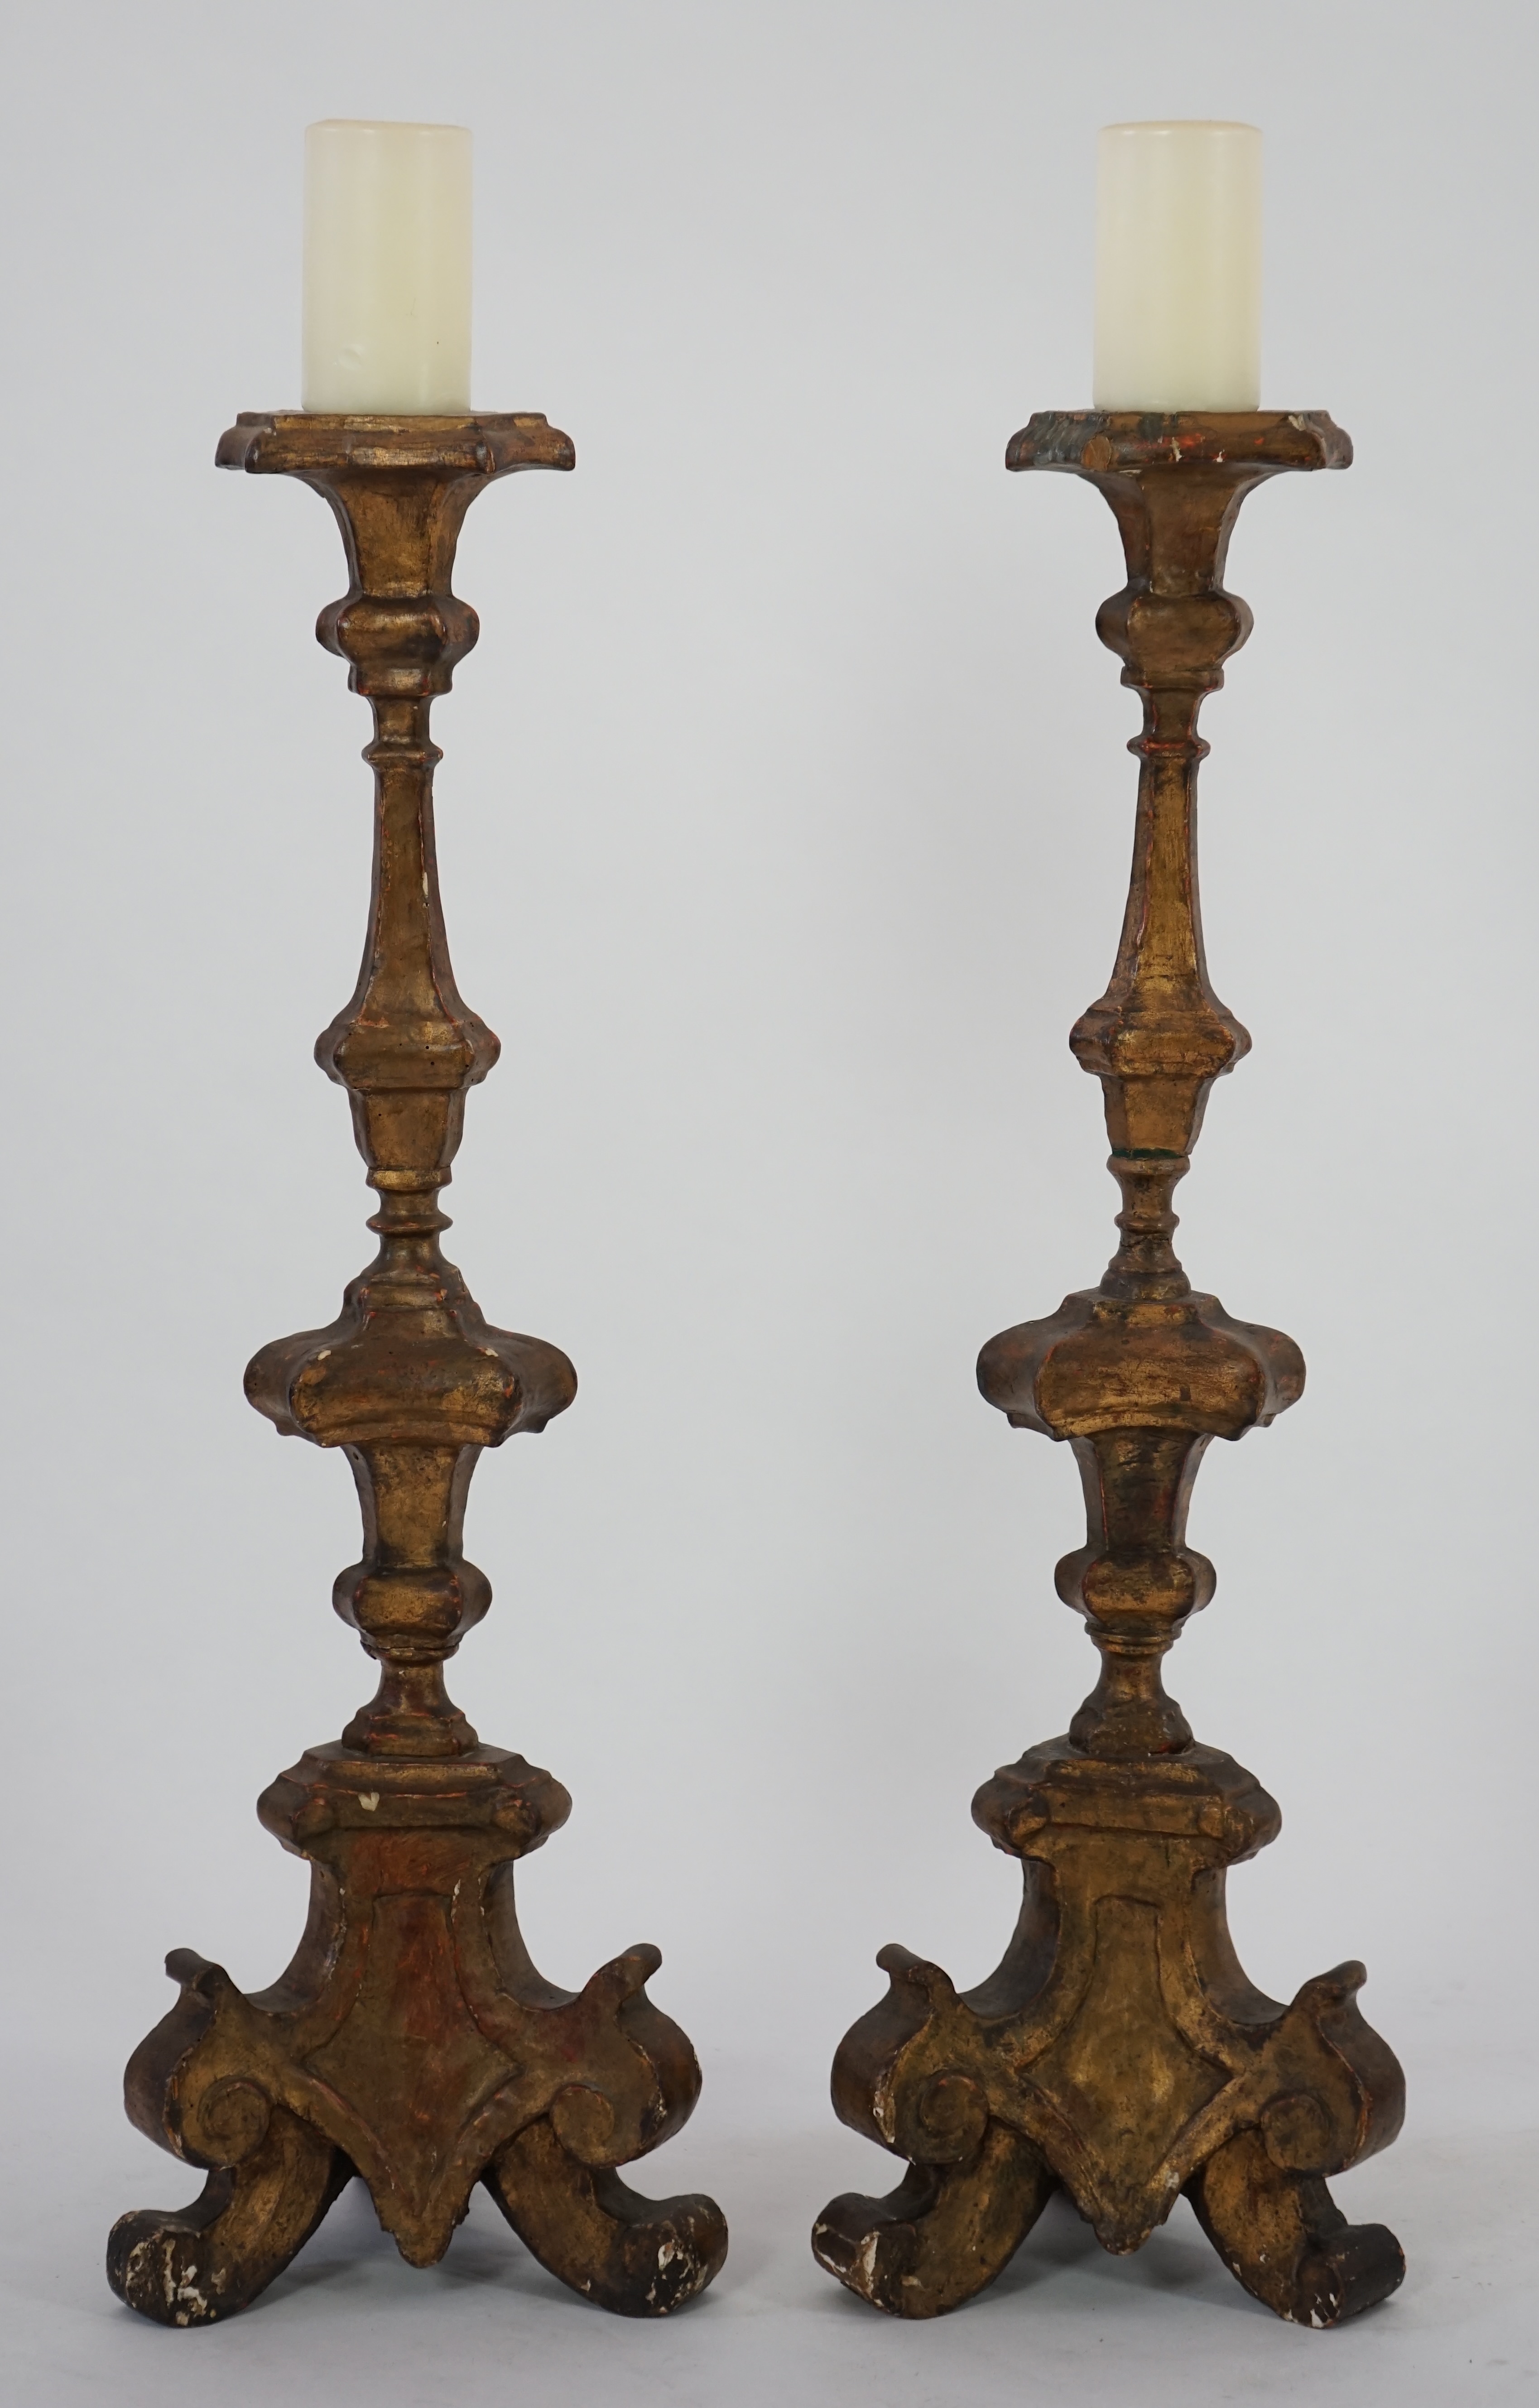 A pair of 18th century Italian giltwood candlesticks